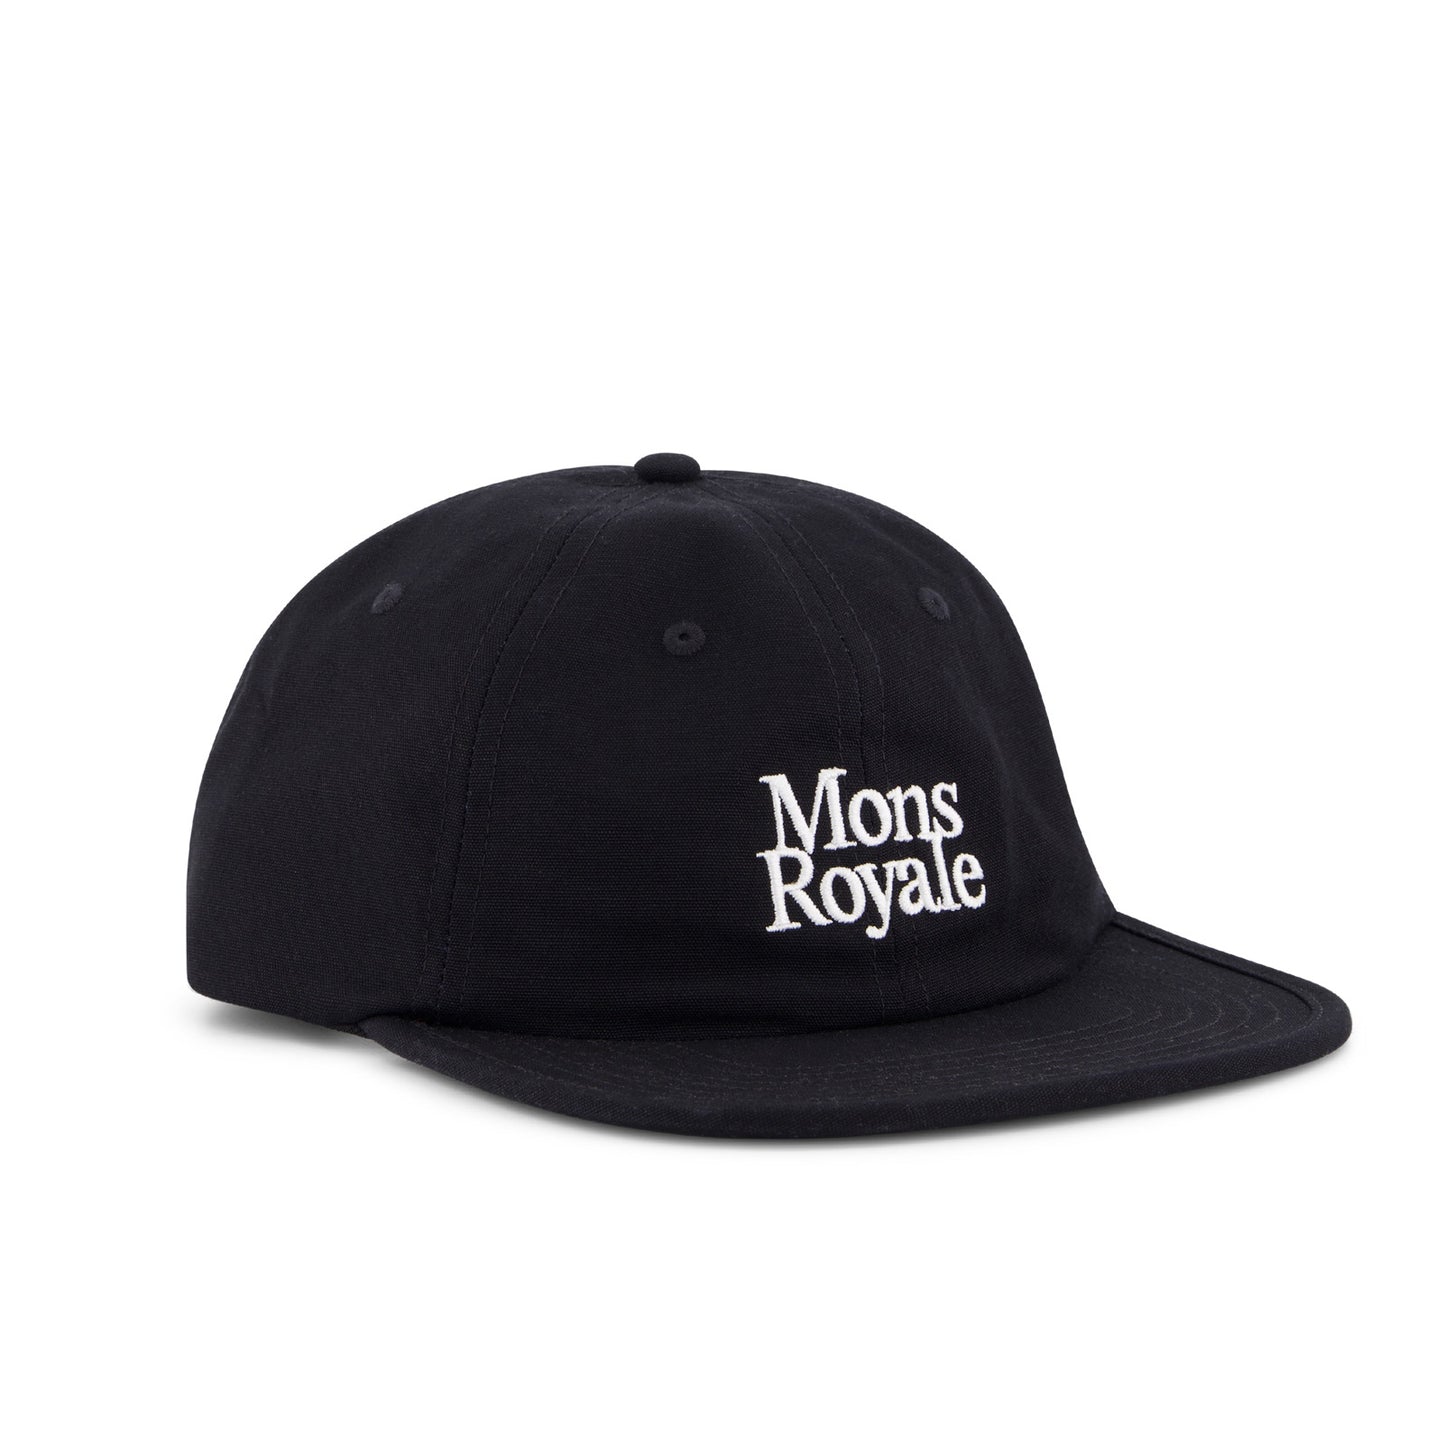 Mons Royale Roam 6 Panel Cap - One Size Fits Most - Black - Image 1